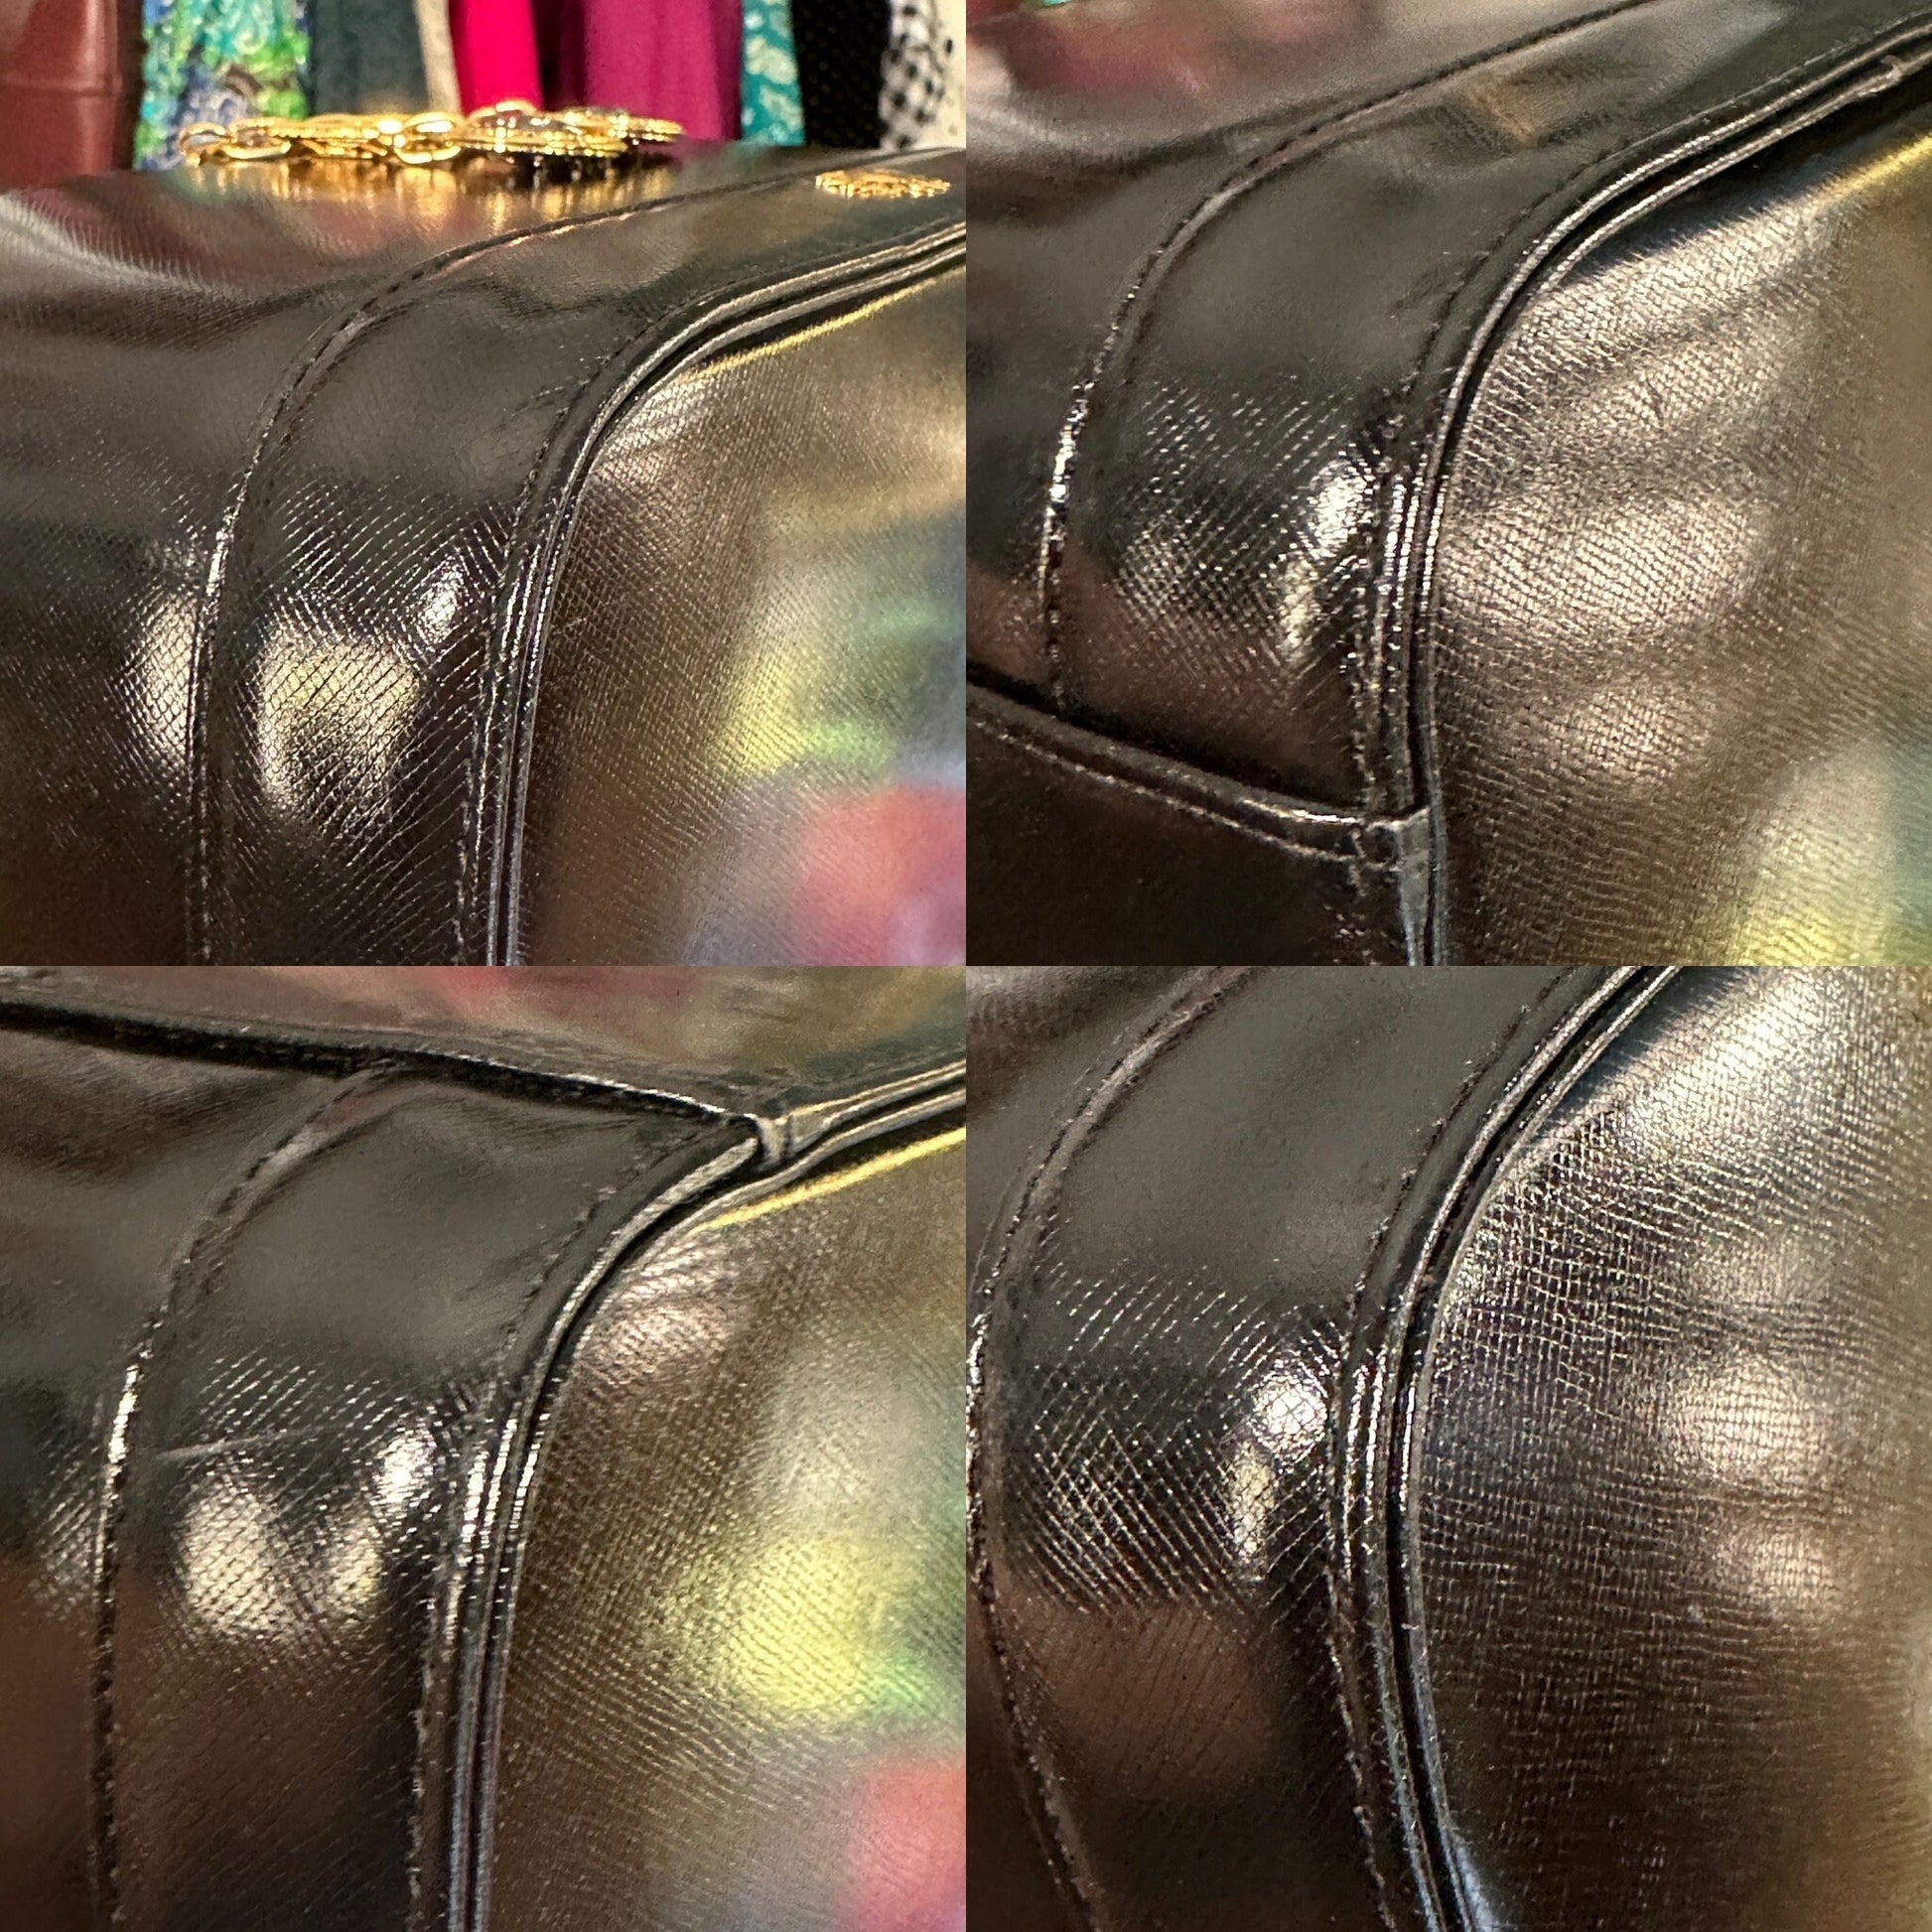 VERSACE VINTAGE 100% Authentic Genuine, Leather Makeup Case Vanity Bag, Black, 1990's, Great Condition, Grade AB